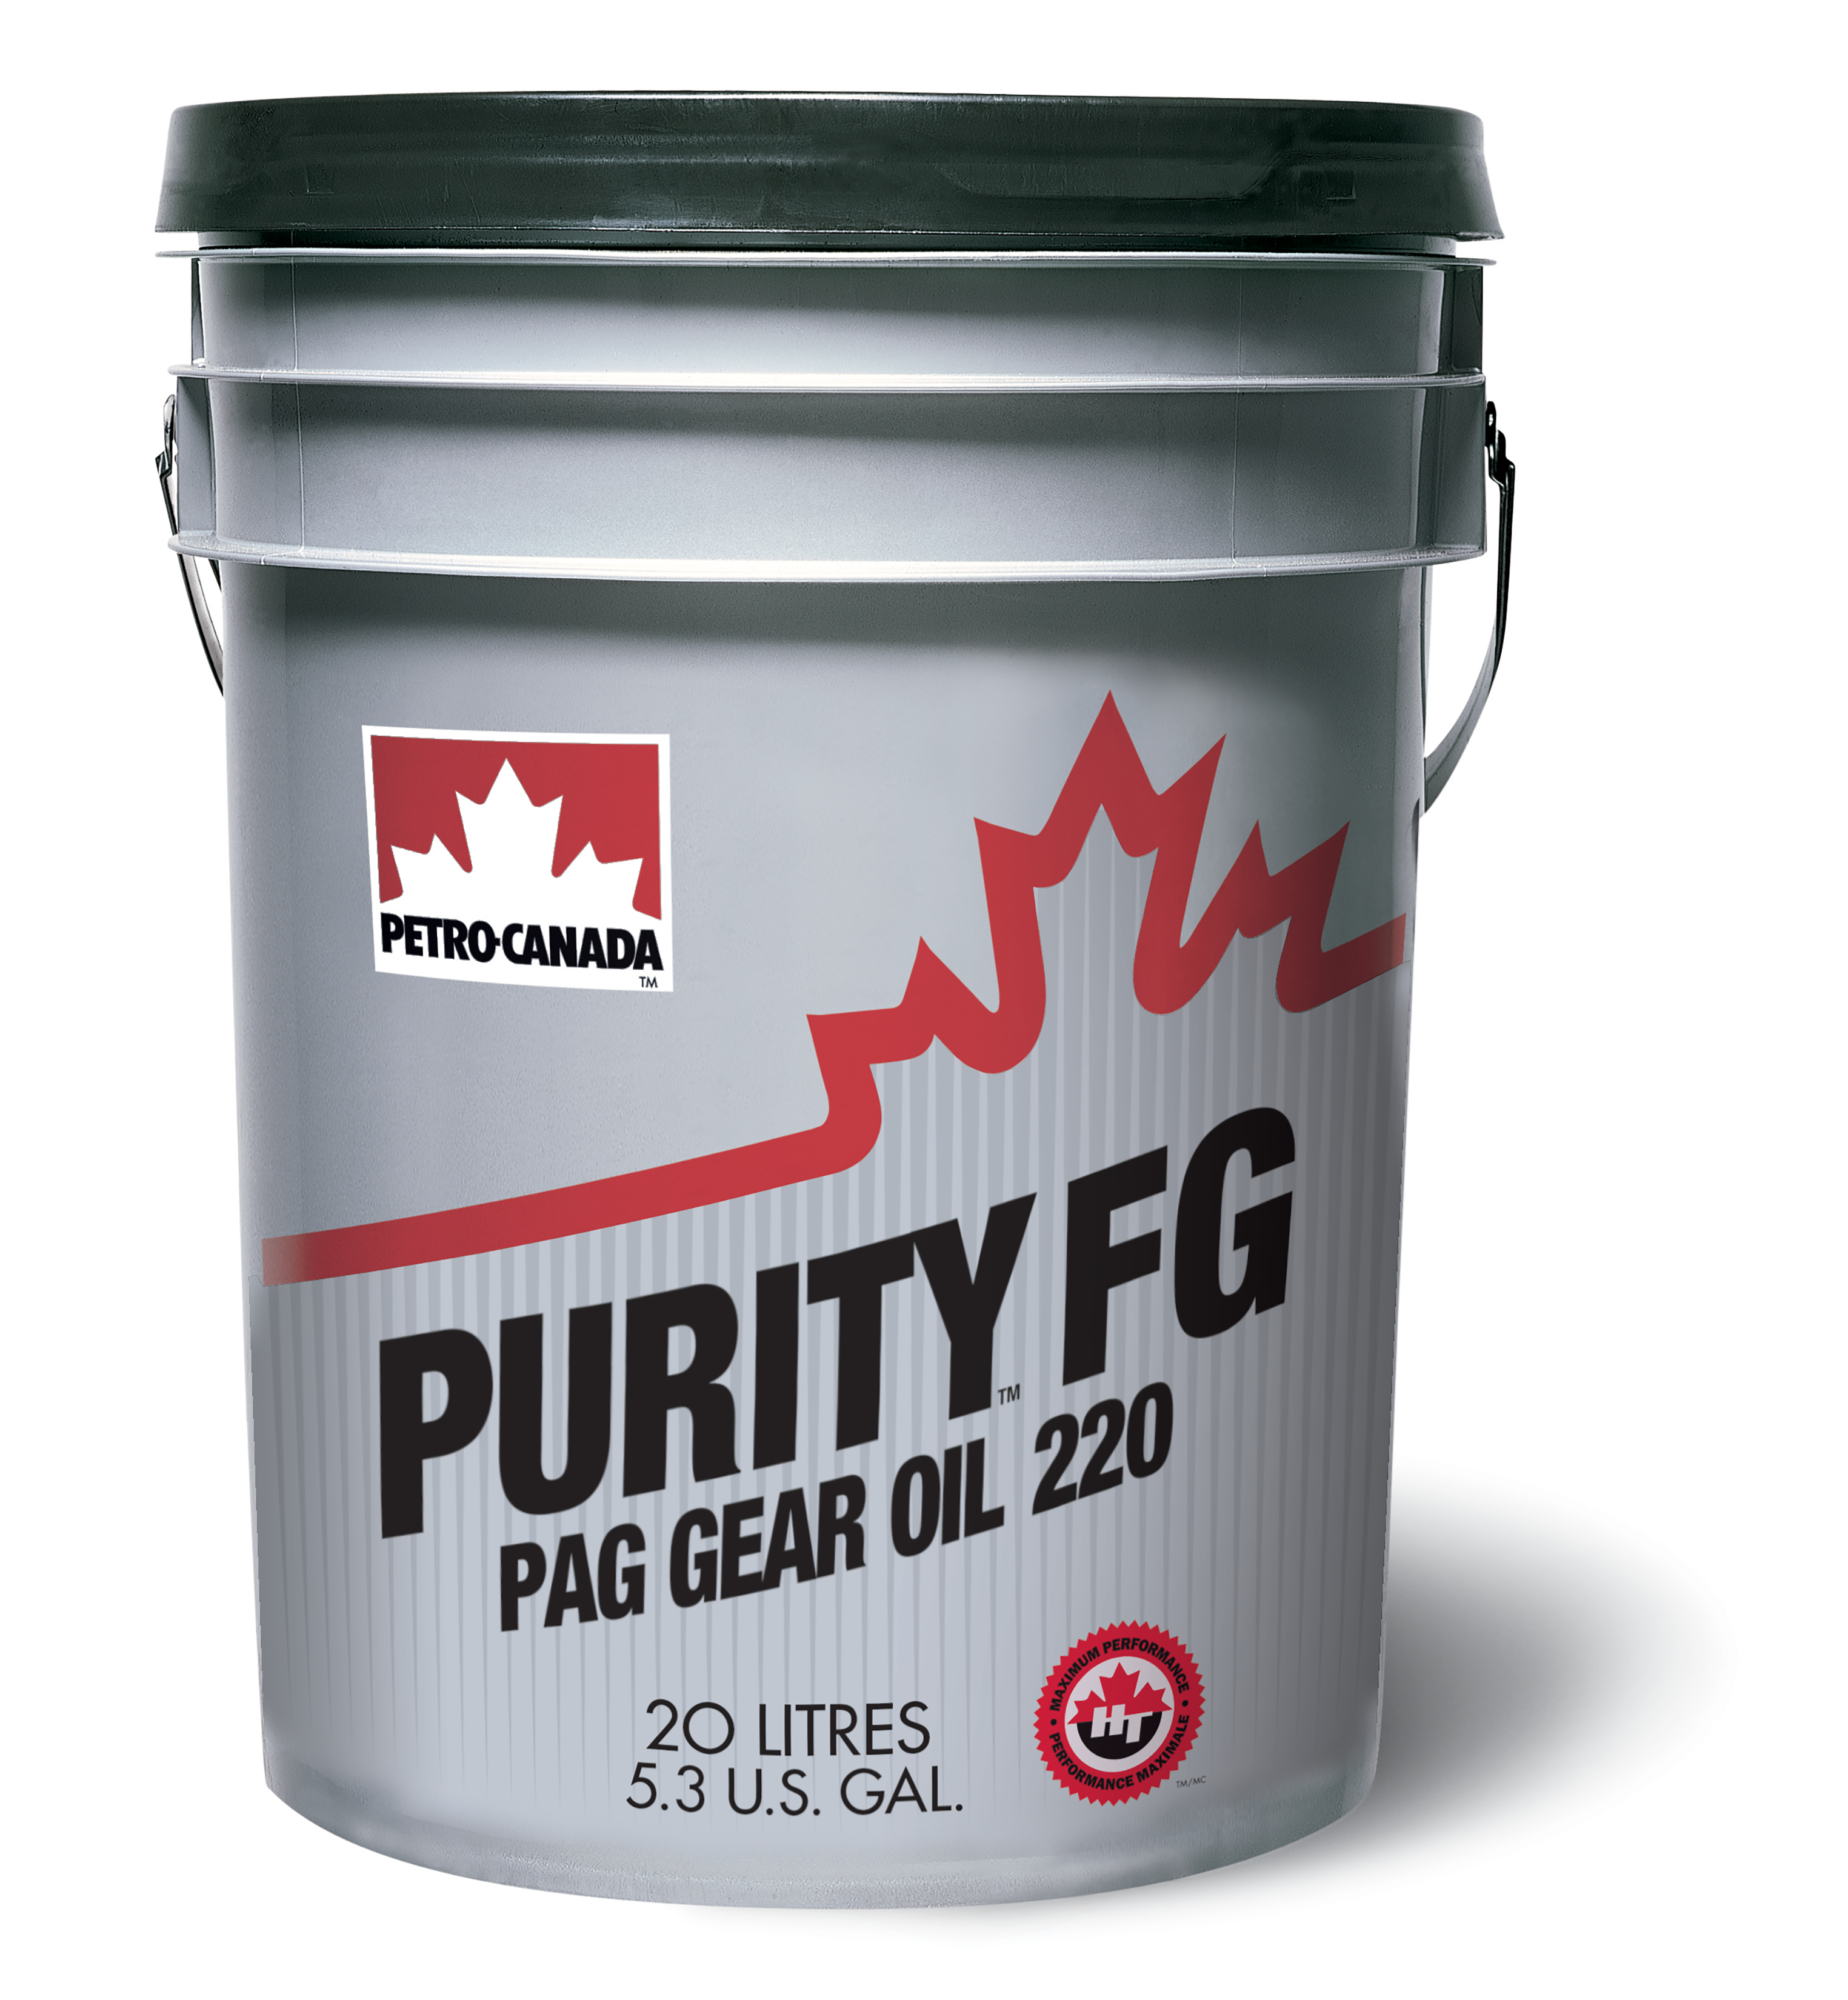 Petro-Canada Purity FG PAG Getriebeöl 220